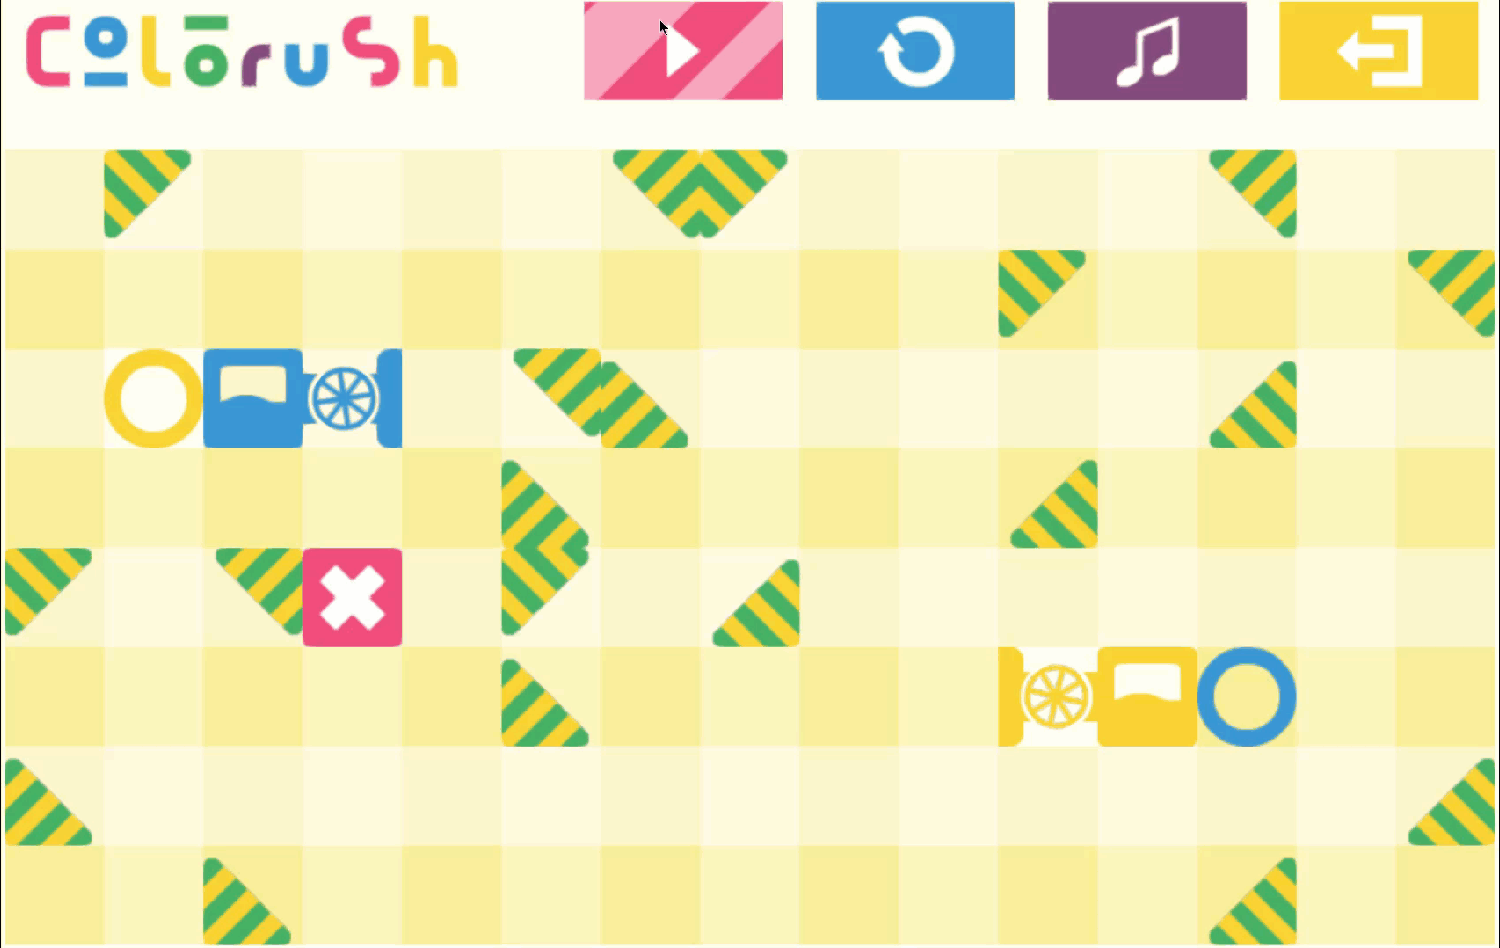 Colorush Game Level 8 Screenshot.